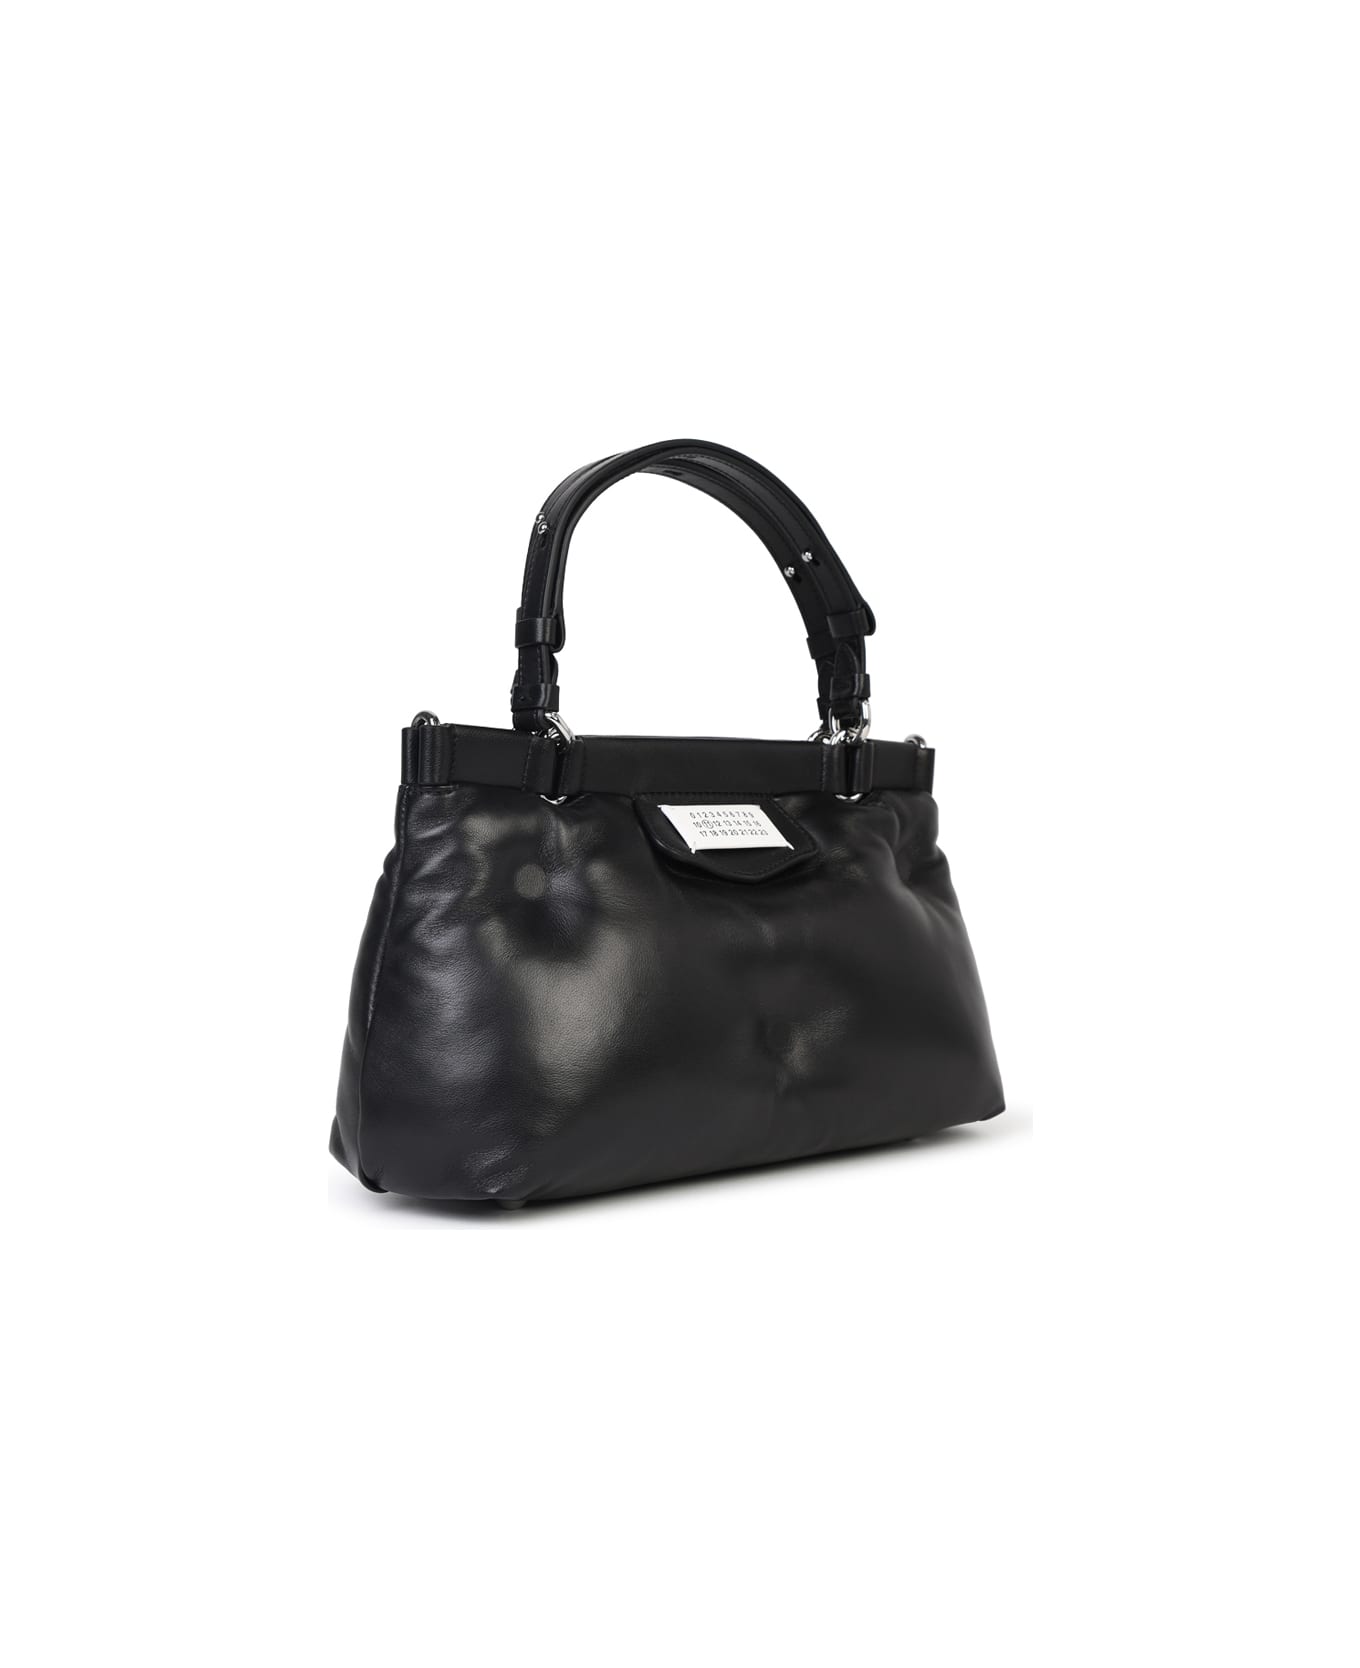 Maison Margiela 'glam Slam' Black Leather Bag - Black トートバッグ